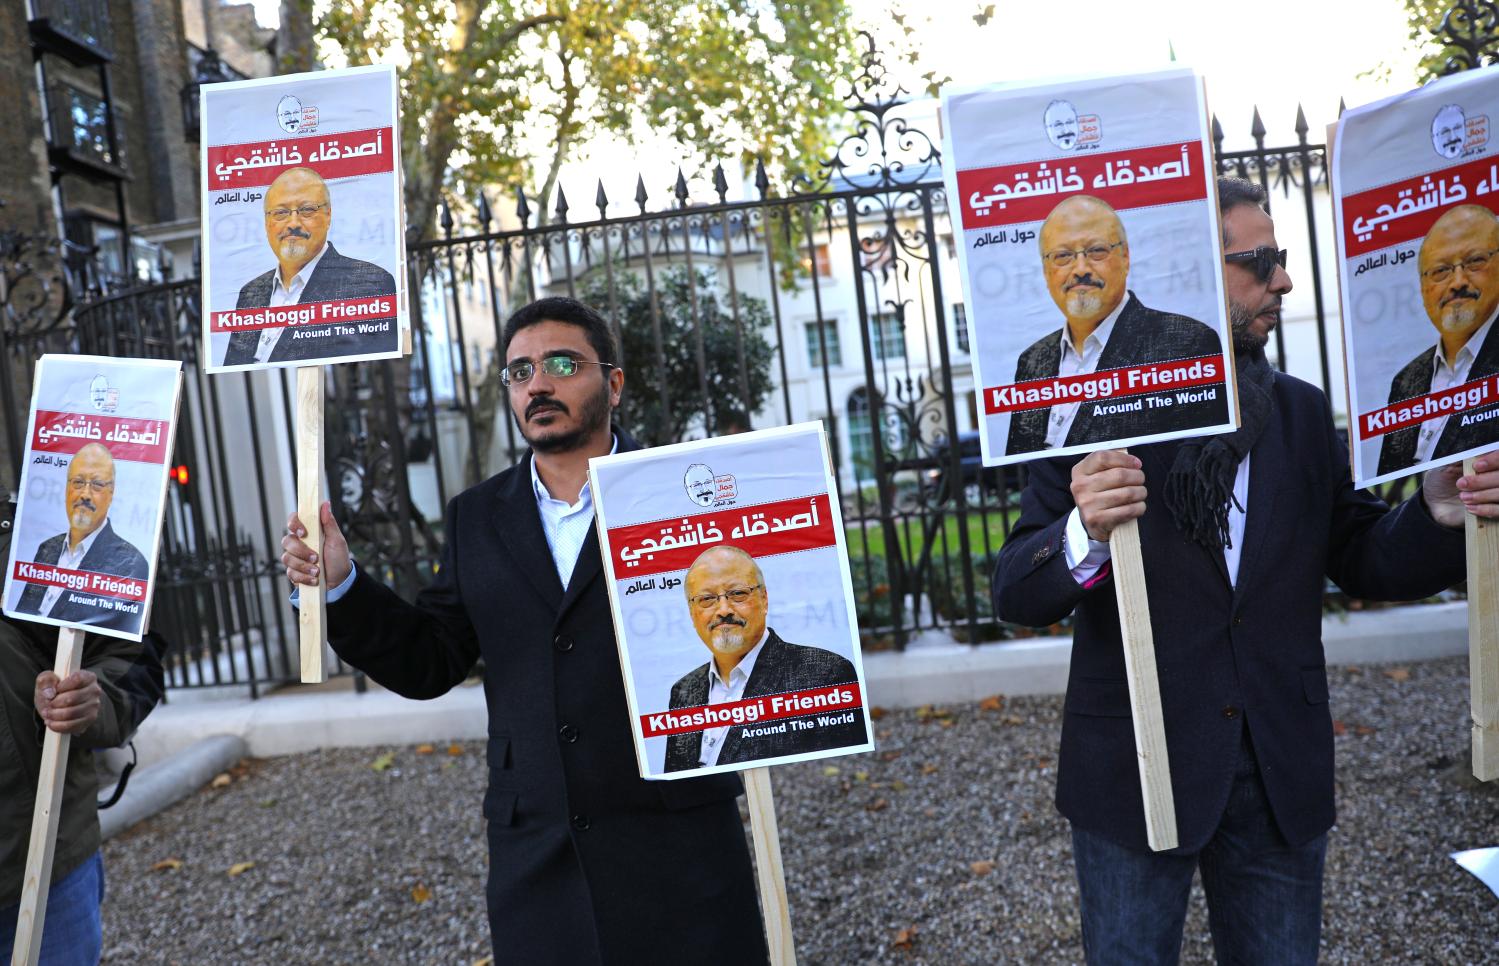 People protest against the killing of journalist Jamal Khashoggi in Turkey outside the Saudi Arabian Embassy in London, Britain, October 26 2018. REUTERS/Simon Dawson - RC1FE7A5A2B0